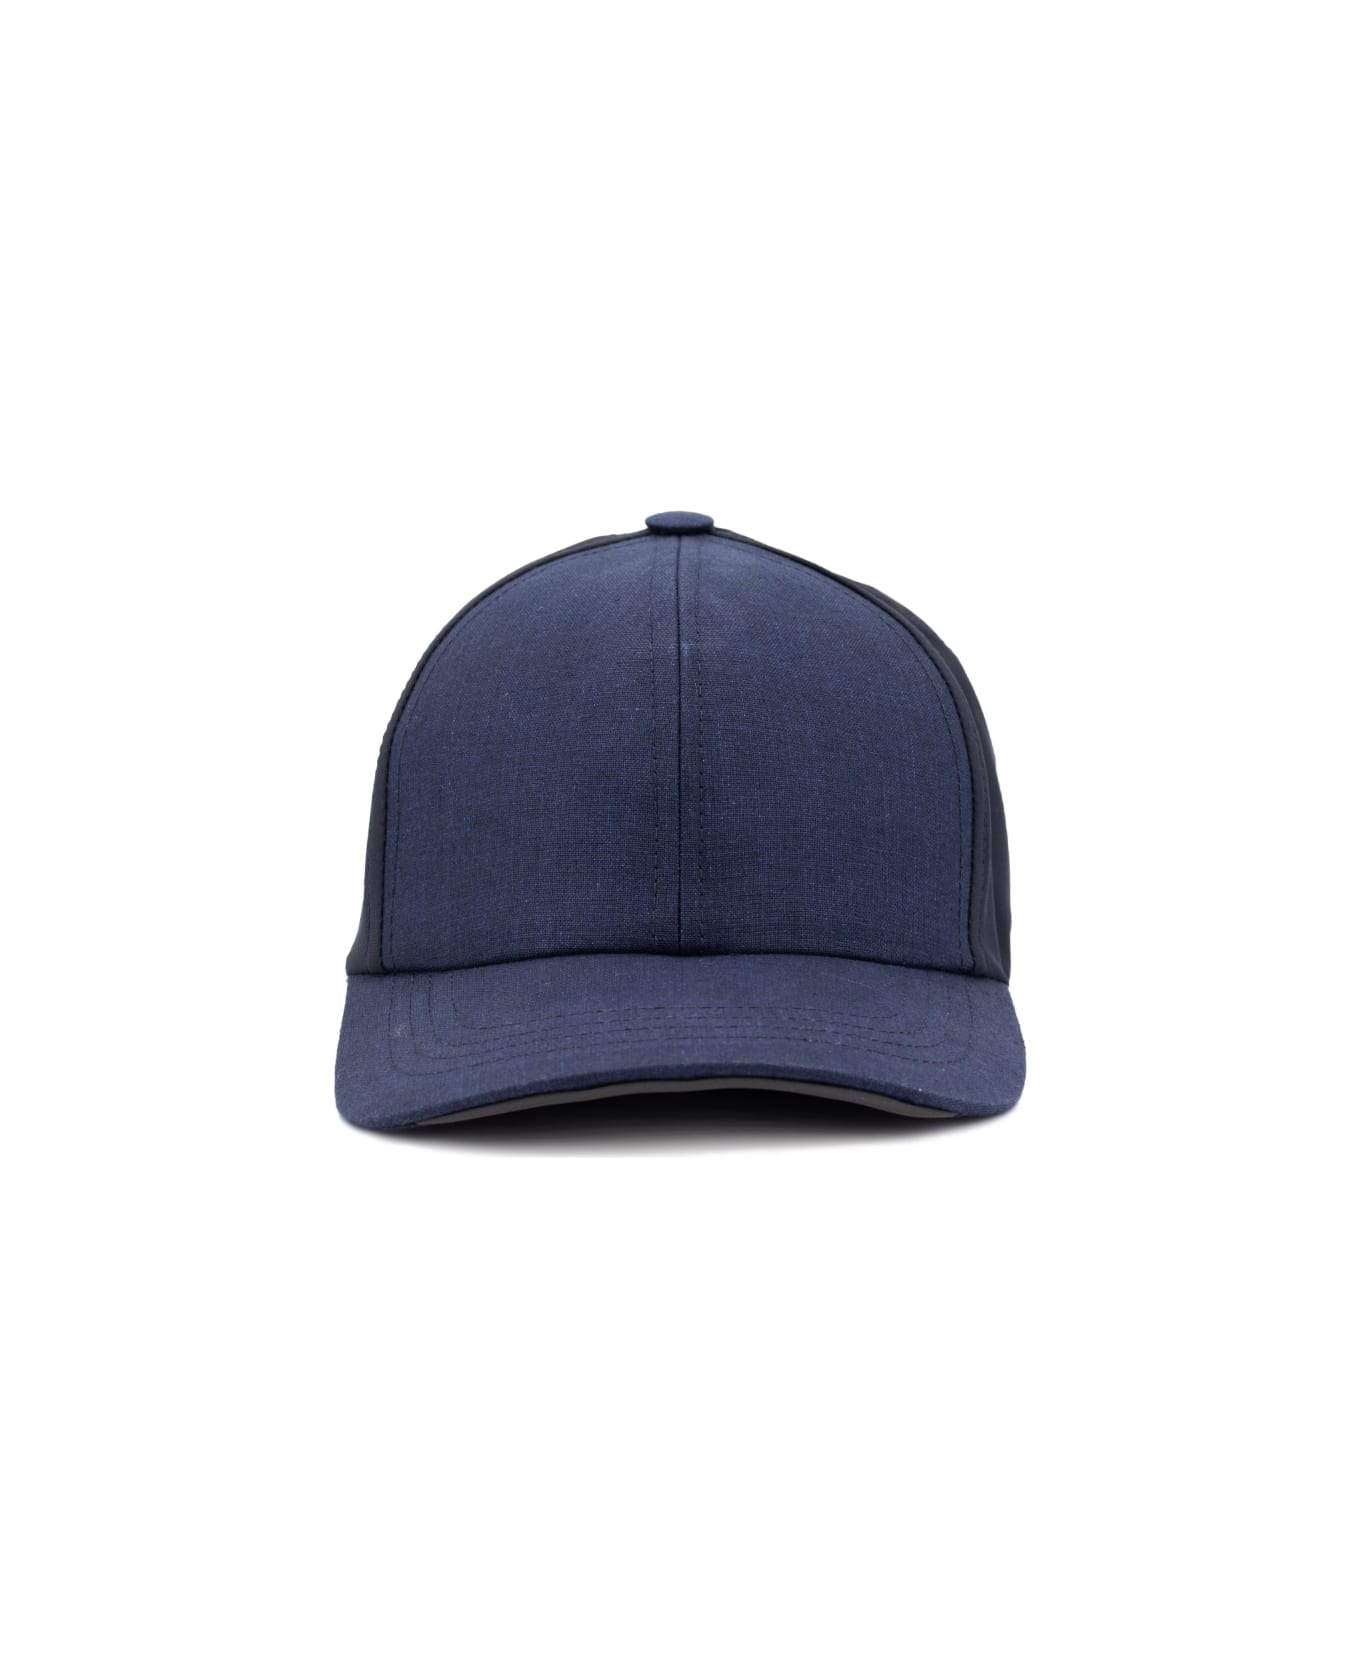 Sease Hat - NAVY BLUE